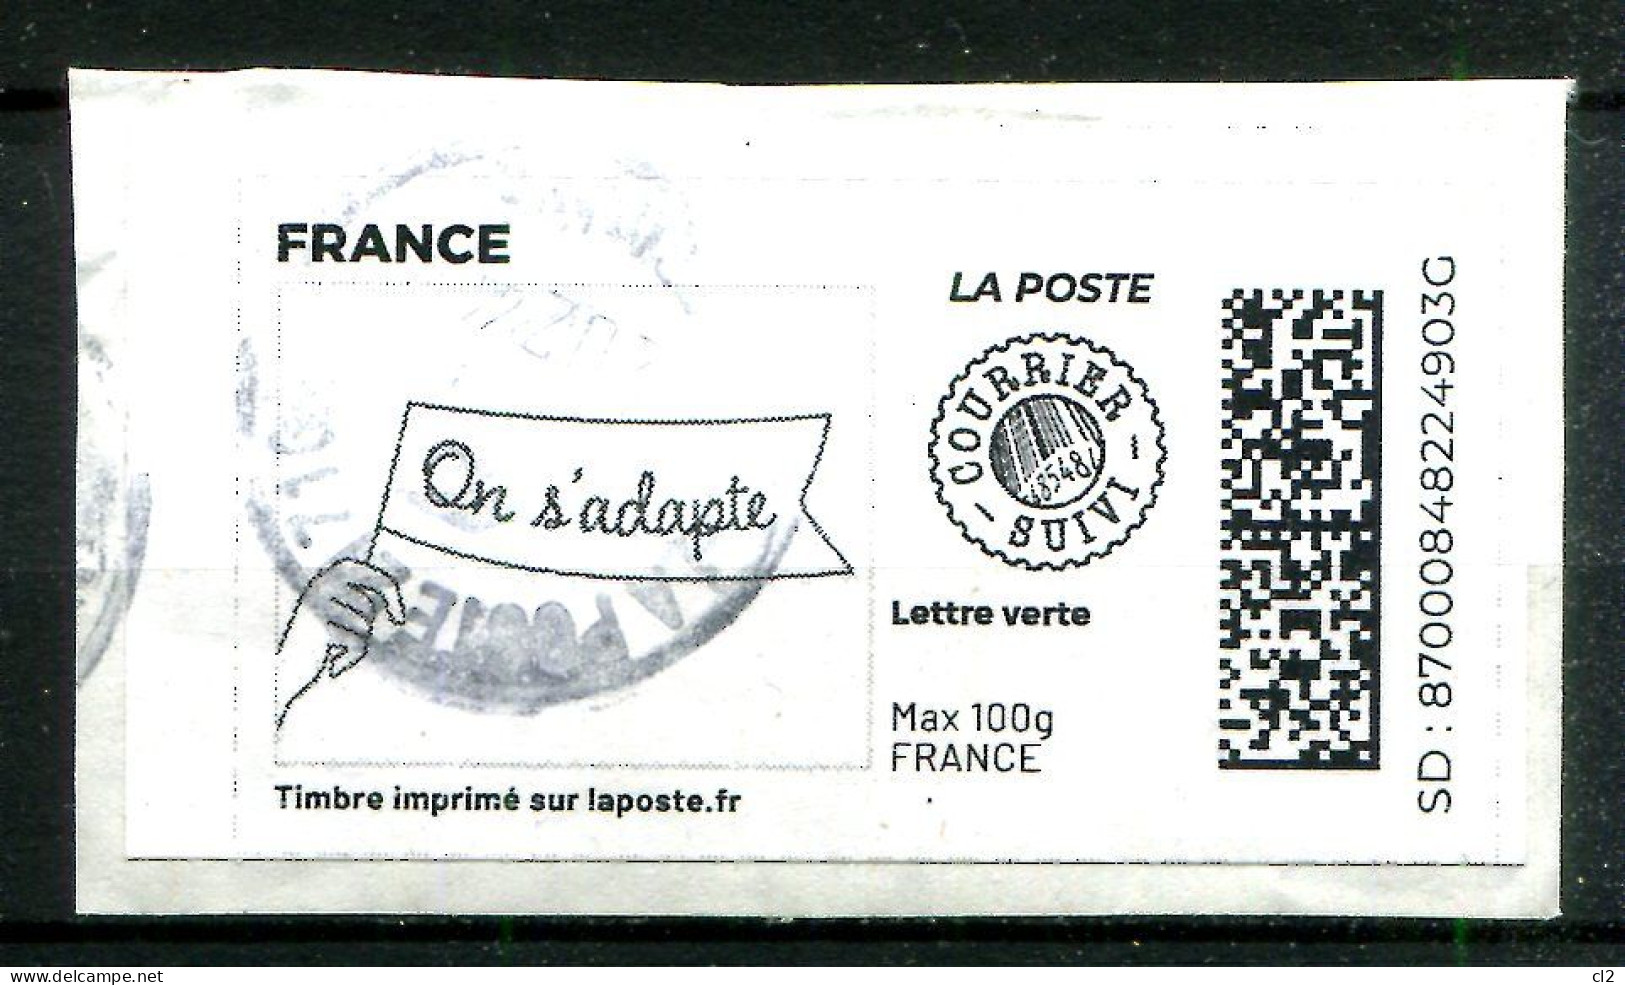 FRANCE - Timbre à Imprimer - Lettre Verte Suivie Max 100g - On S'adapte - Printable Stamps (Montimbrenligne)